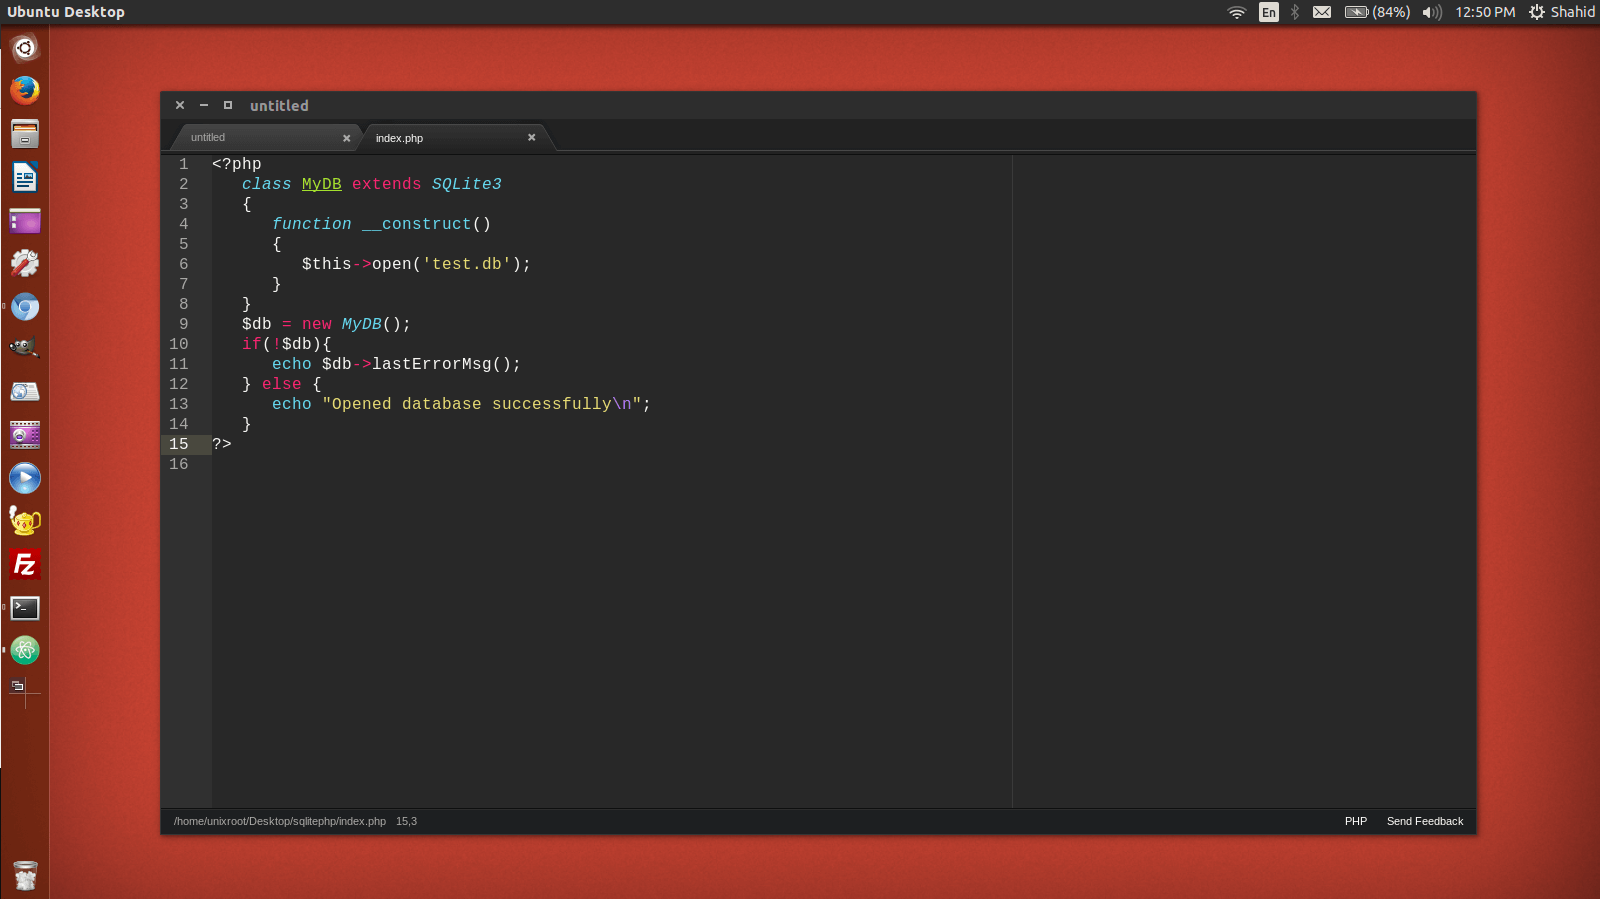 Atom editor in Ubuntu